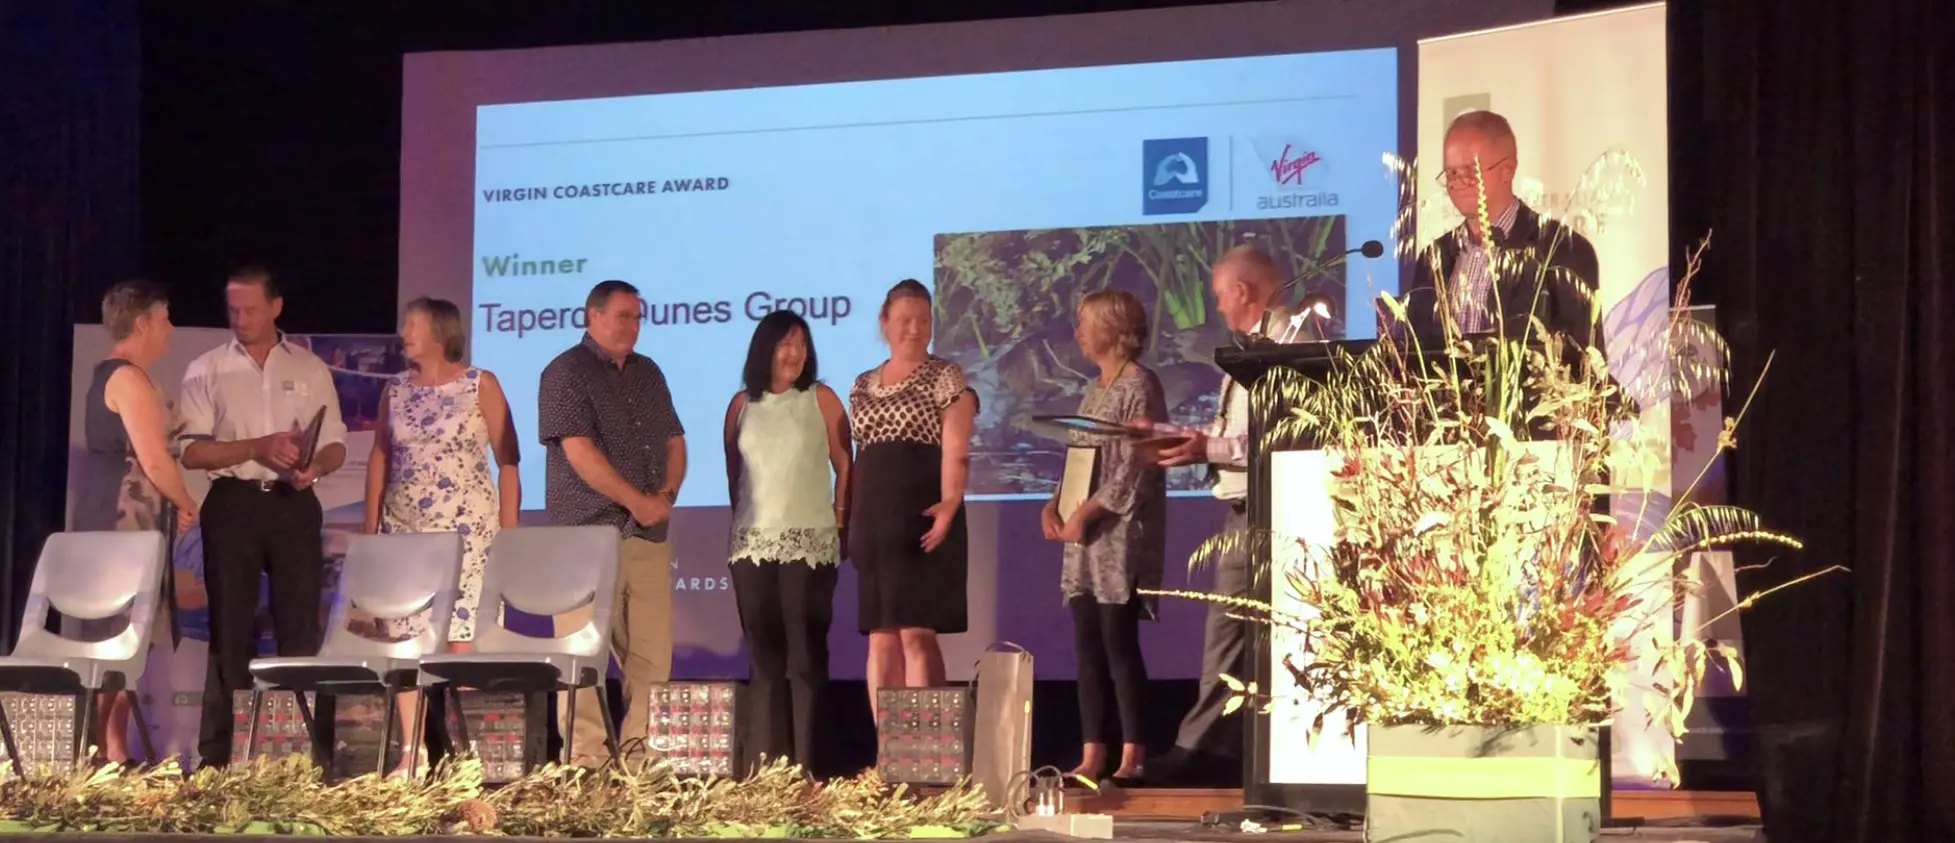 Taperoo Dunes … Winners of the 2019 Virgin Coastcare Award!